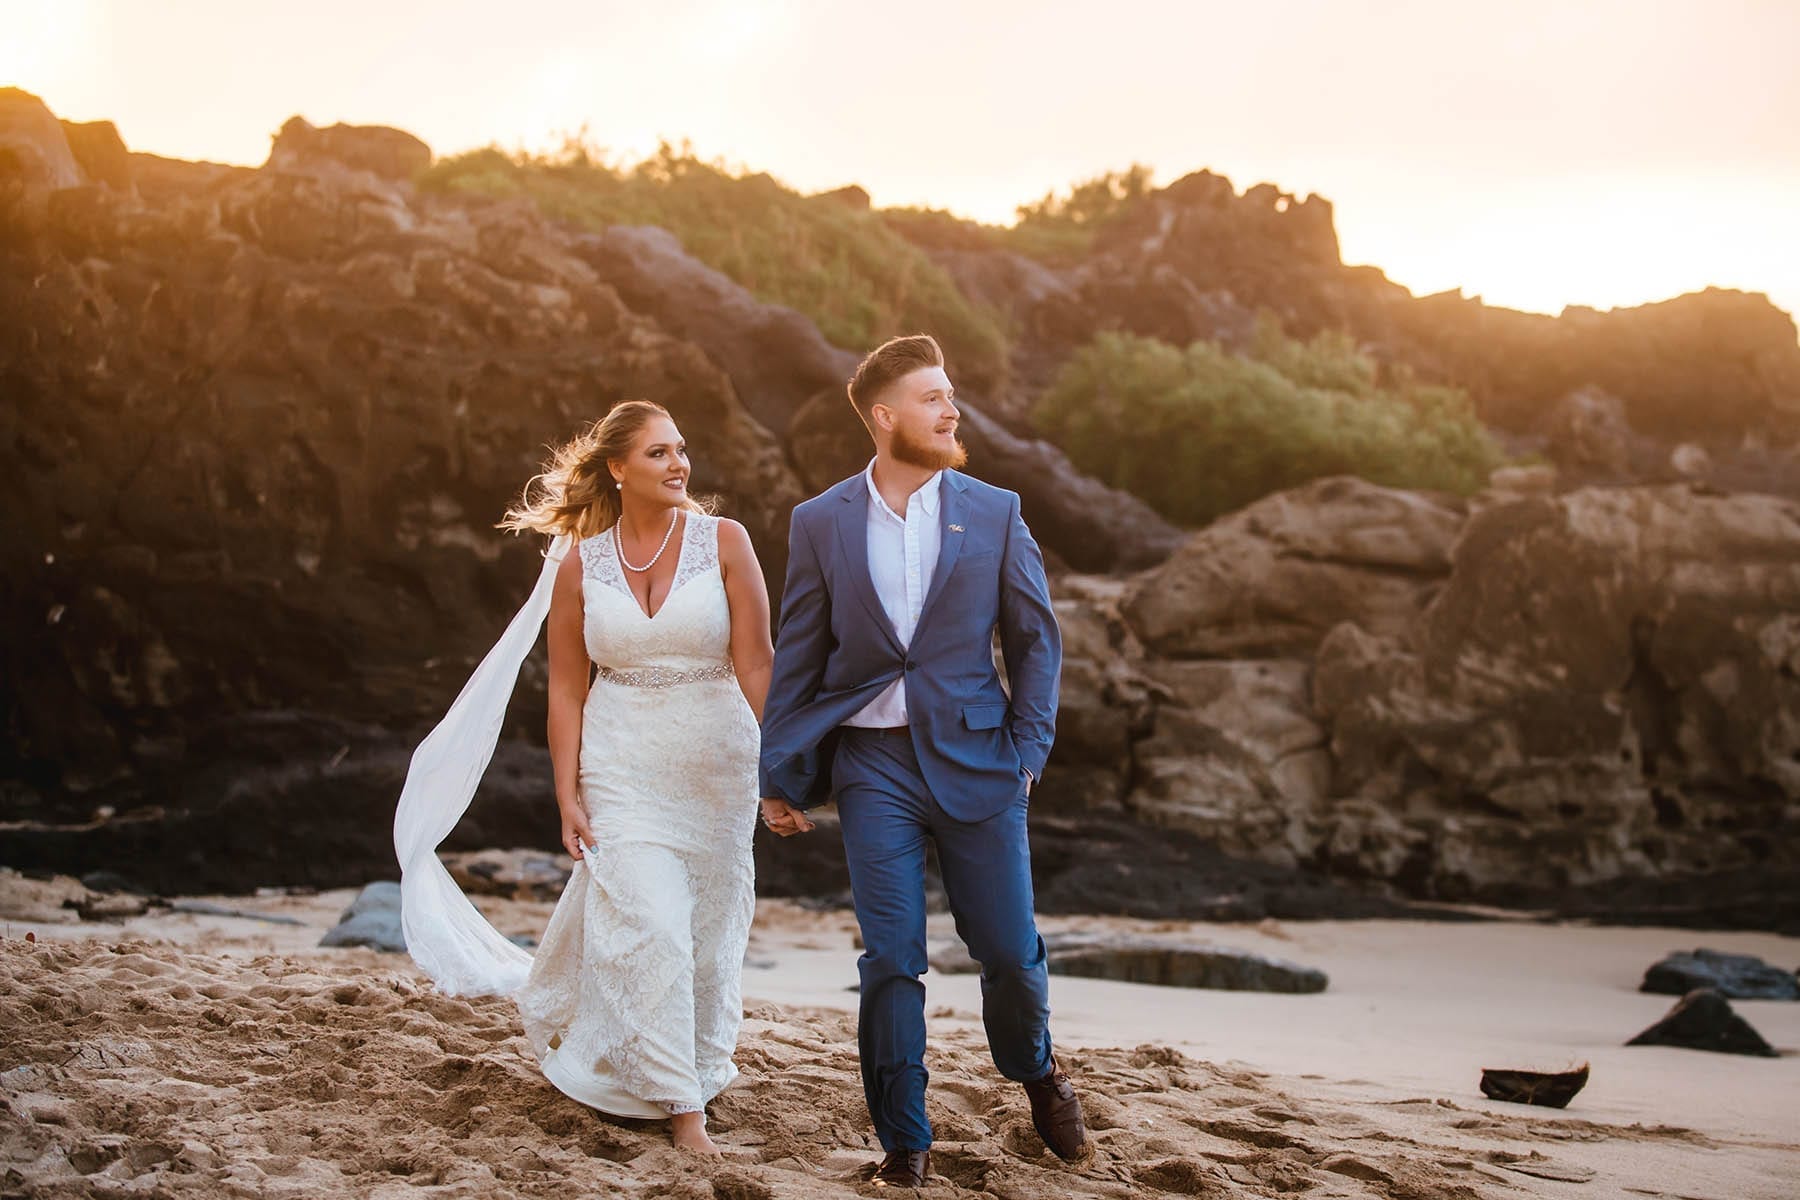 Maui wedding locations